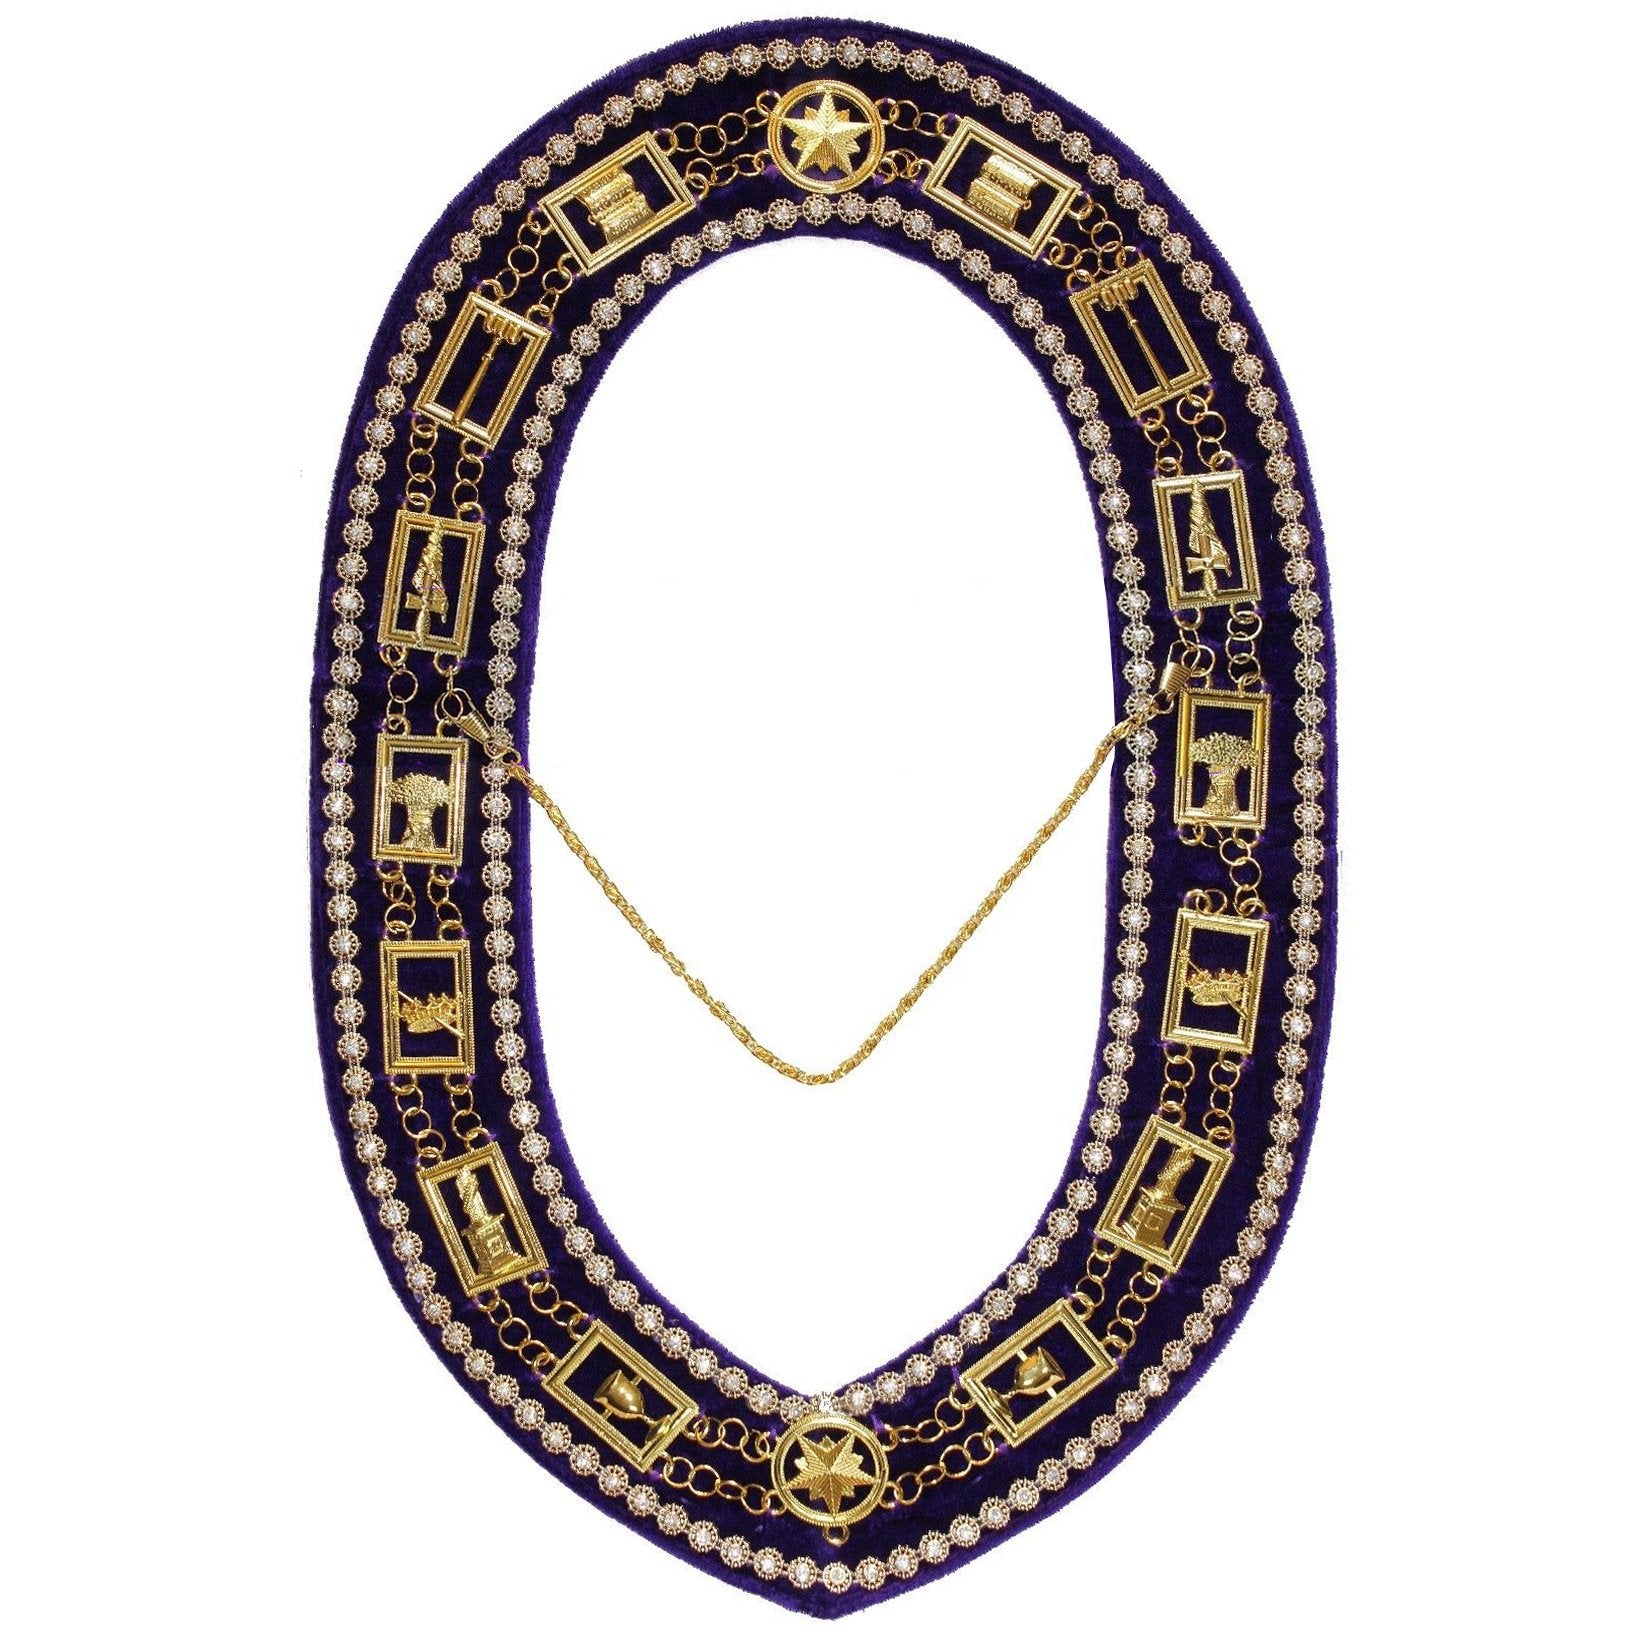 OES Chain Collar - Gold Plated with Rhinestones on Purple Velvet - Bricks Masons